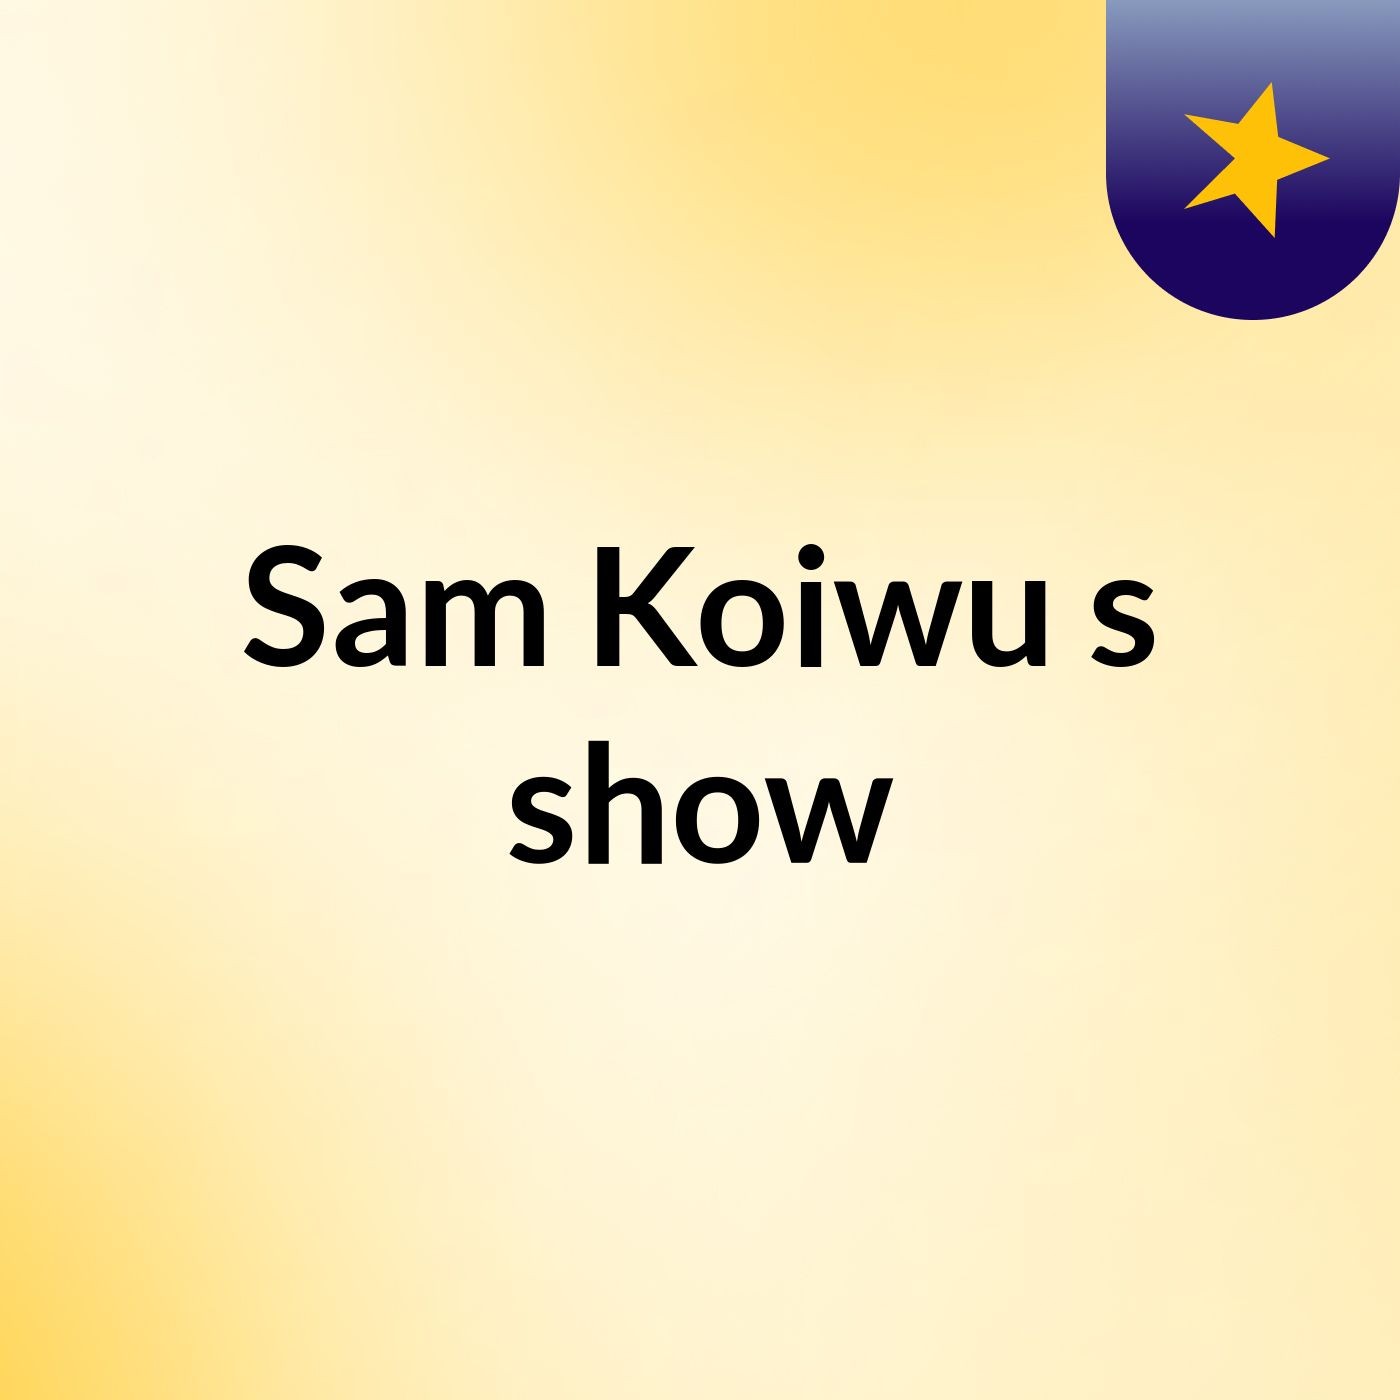 Sam Koiwu's show